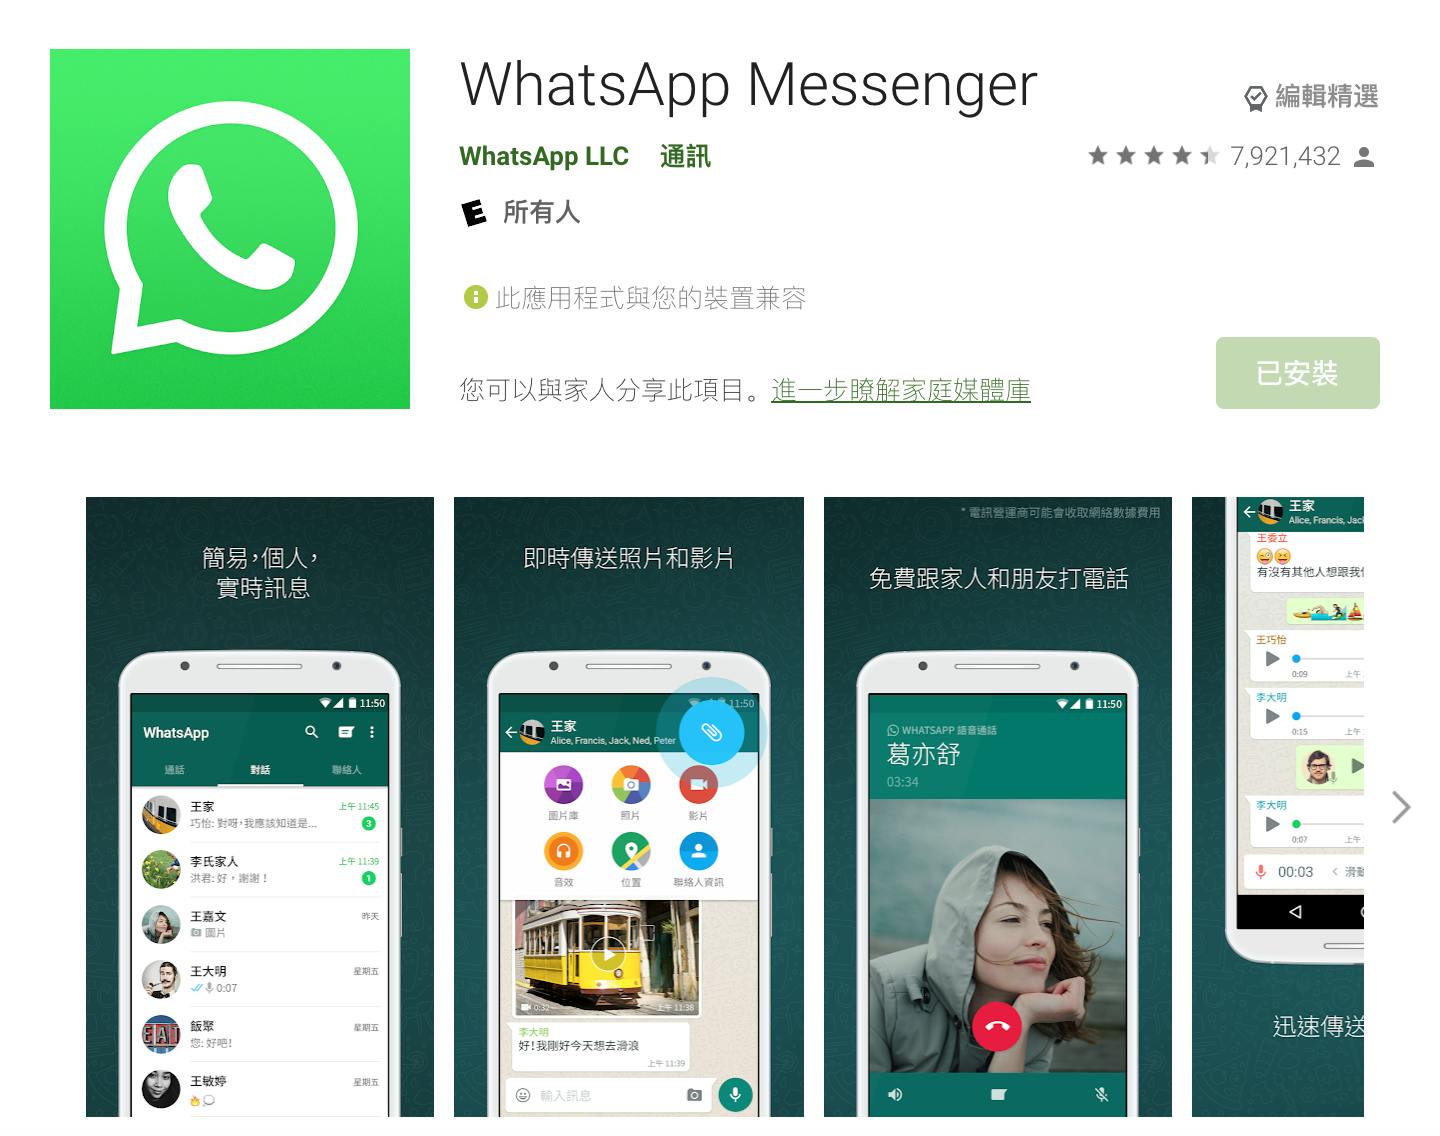 WhatsApp Users